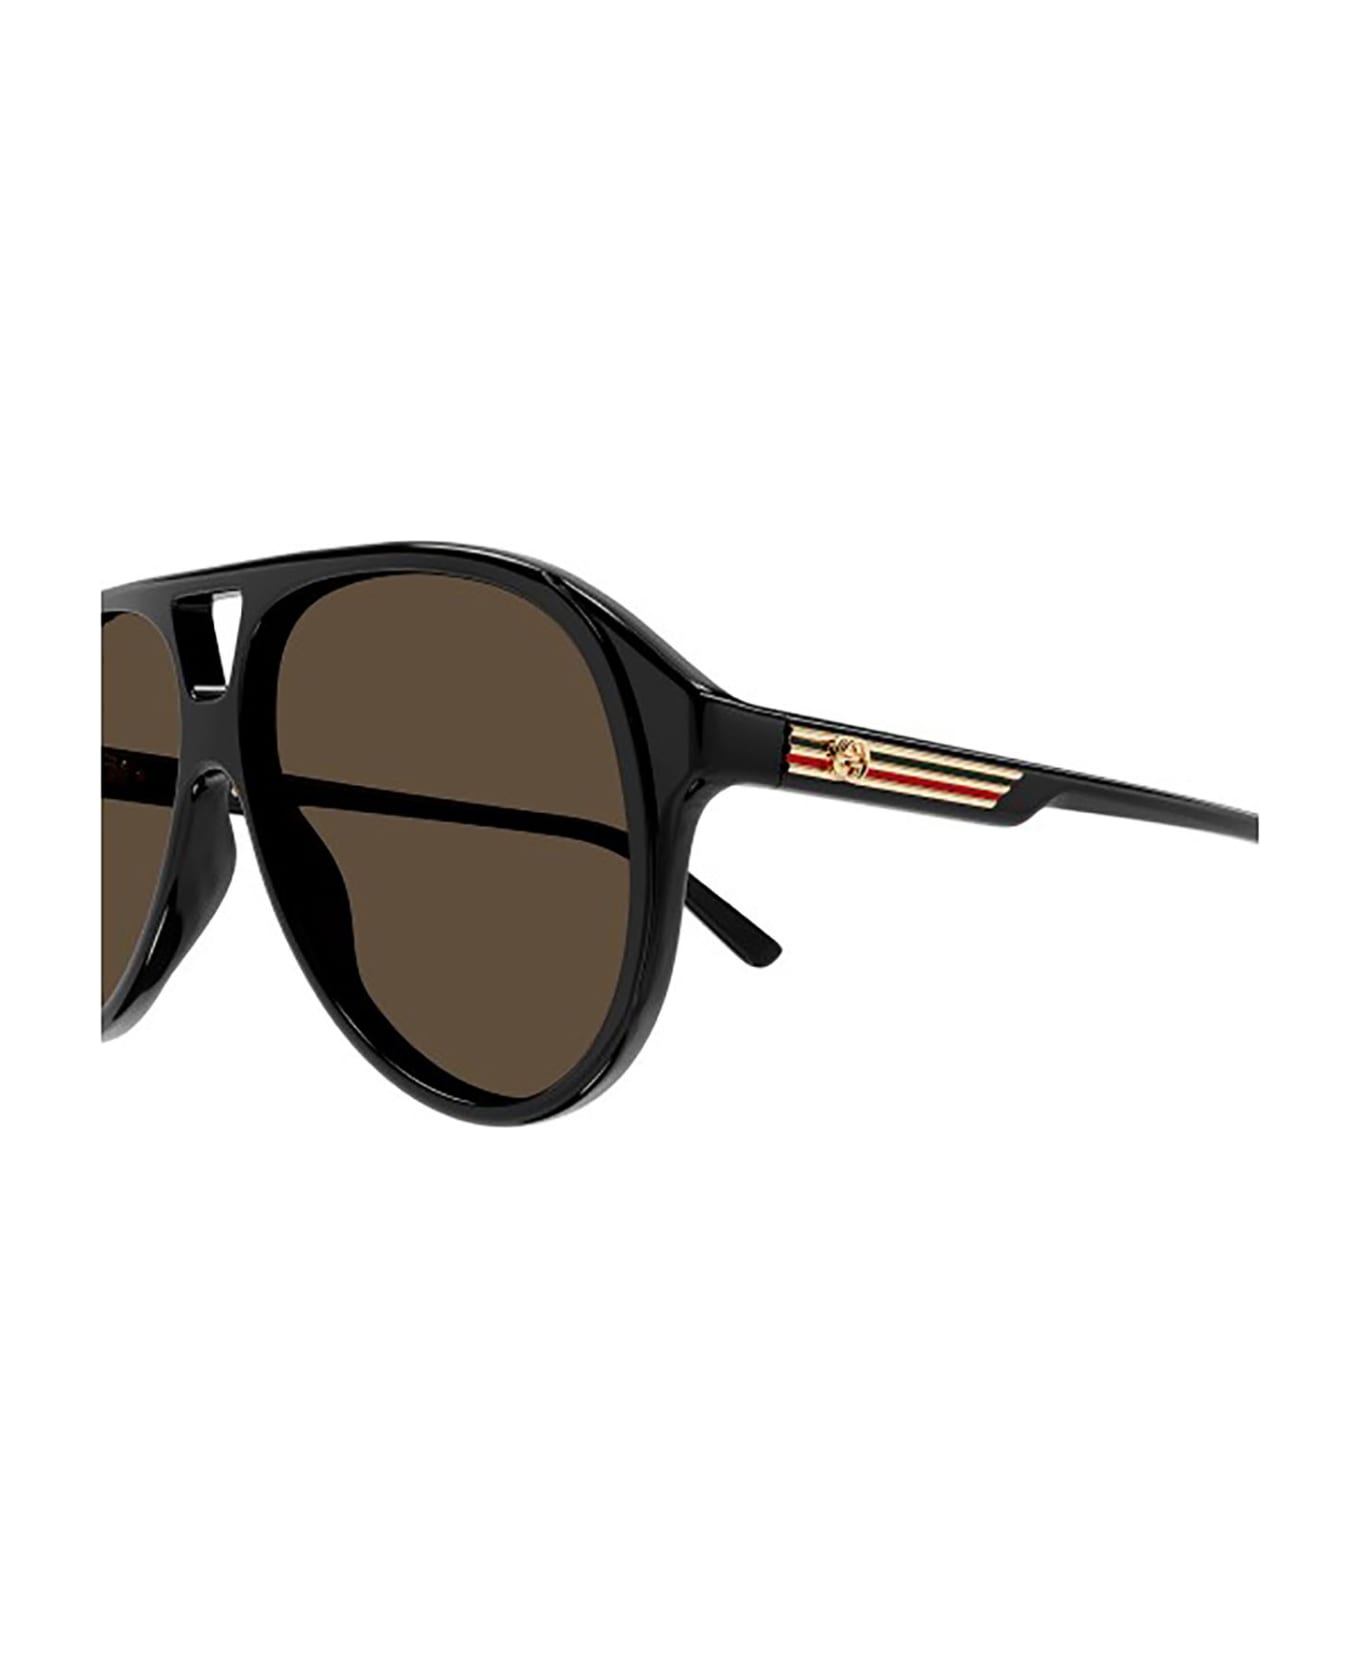 Gucci Eyewear Gg1286s Sunglasses - 001 black black brown